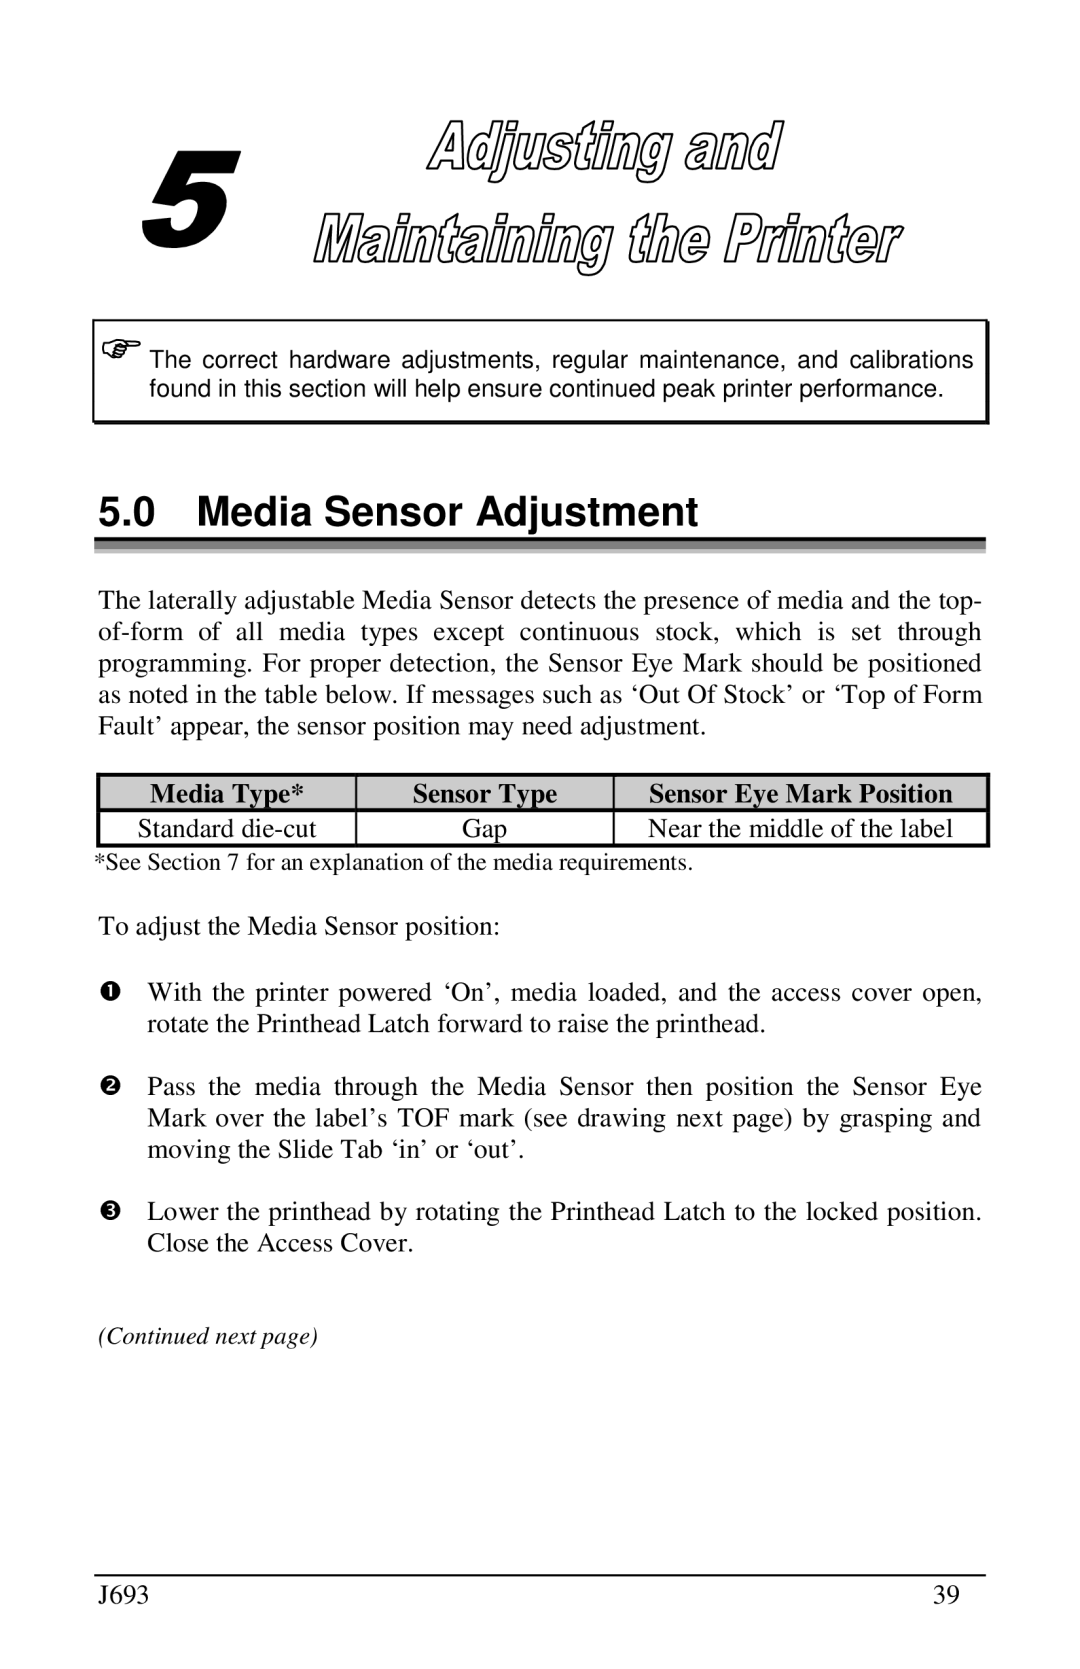 Pitney Bowes J693 manual Media Sensor Adjustment, Media Type, Sensor Type, Sensor Eye Mark Position 